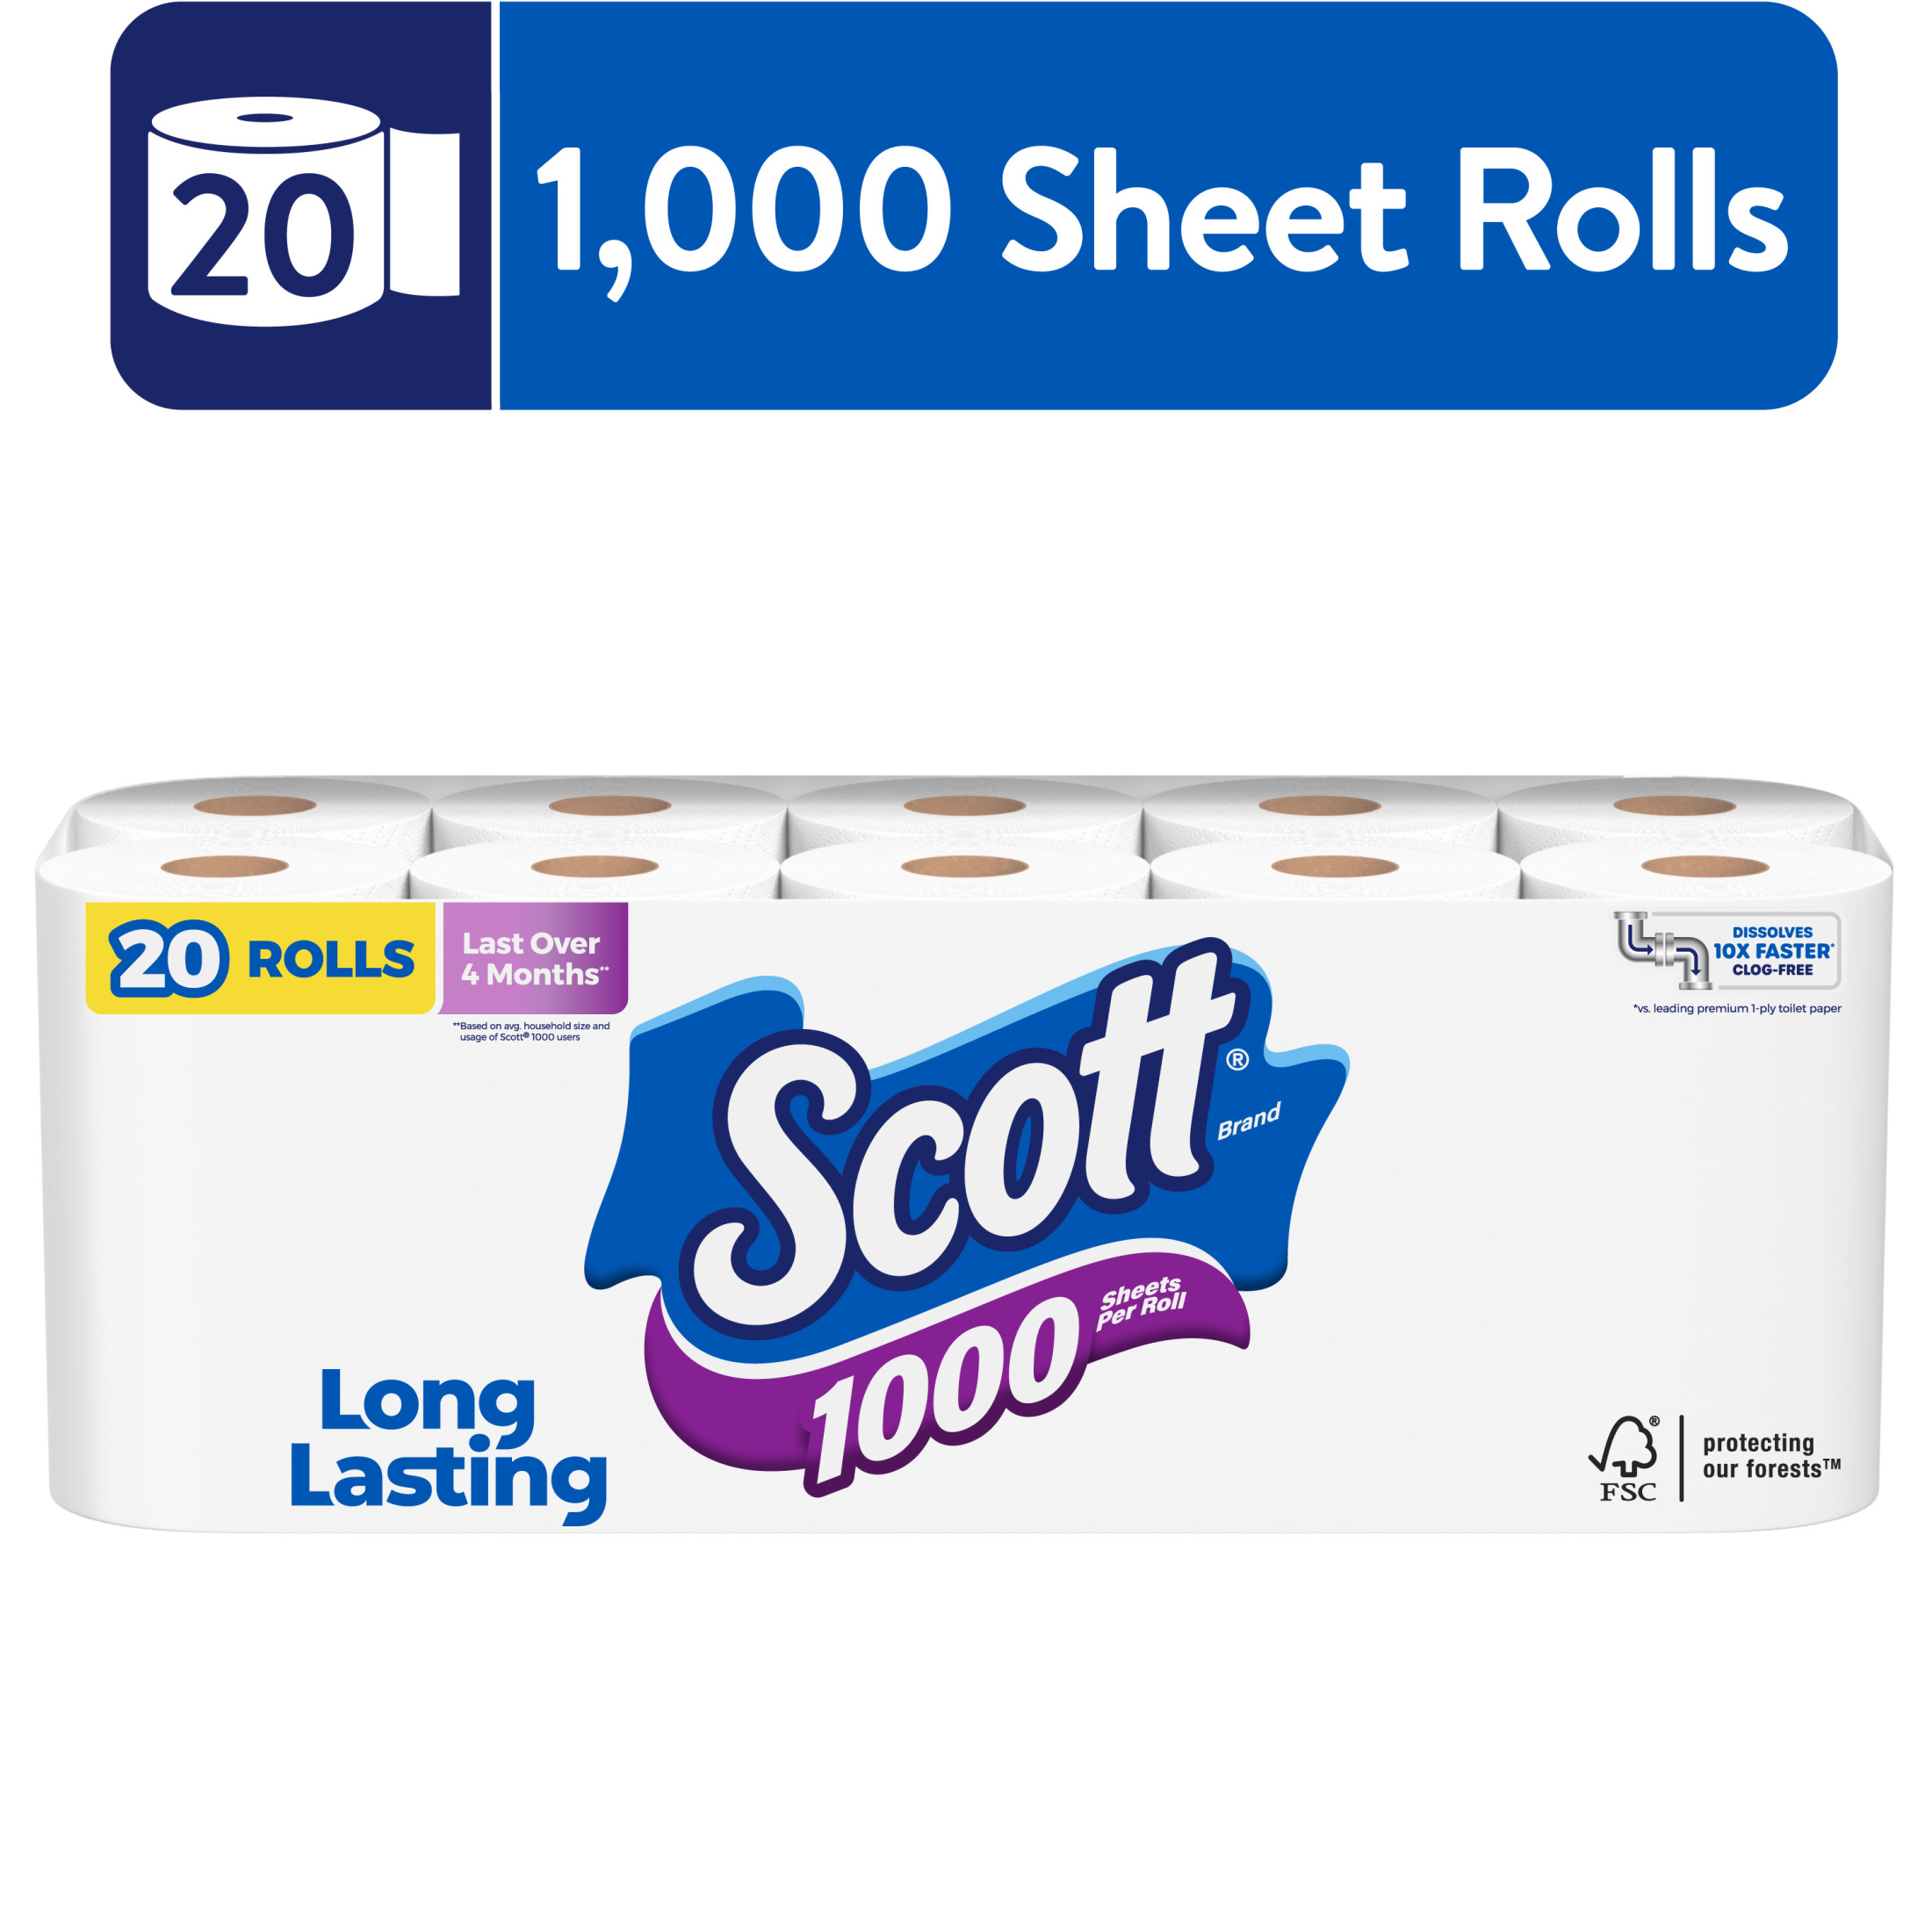 Scott 1000 Toilet Paper, 20 Rolls, 1,000 Sheets Per Roll - image 1 of 10